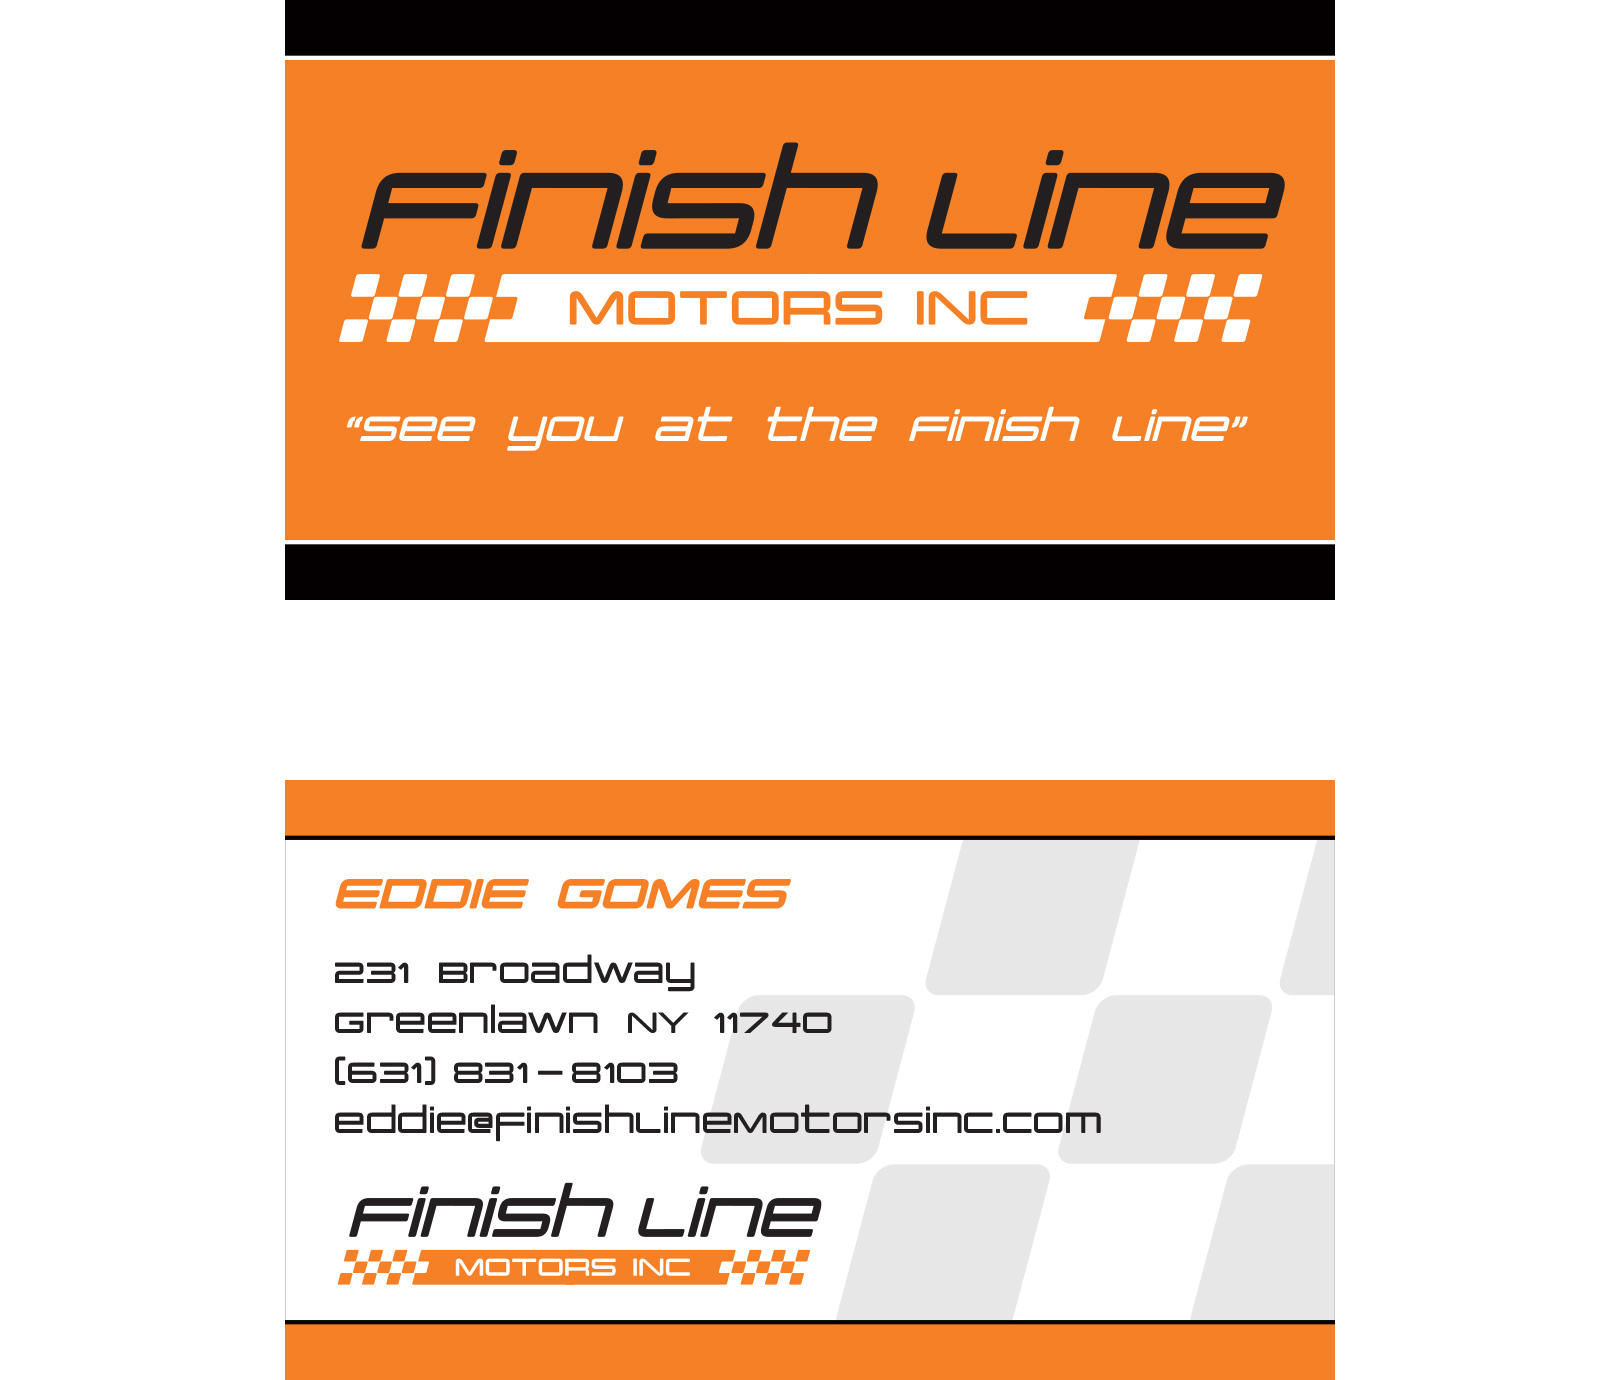 Finish Line Motors